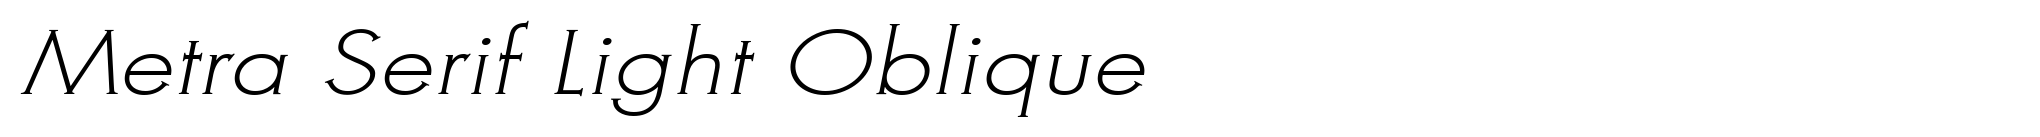 Metra Serif Light Oblique image